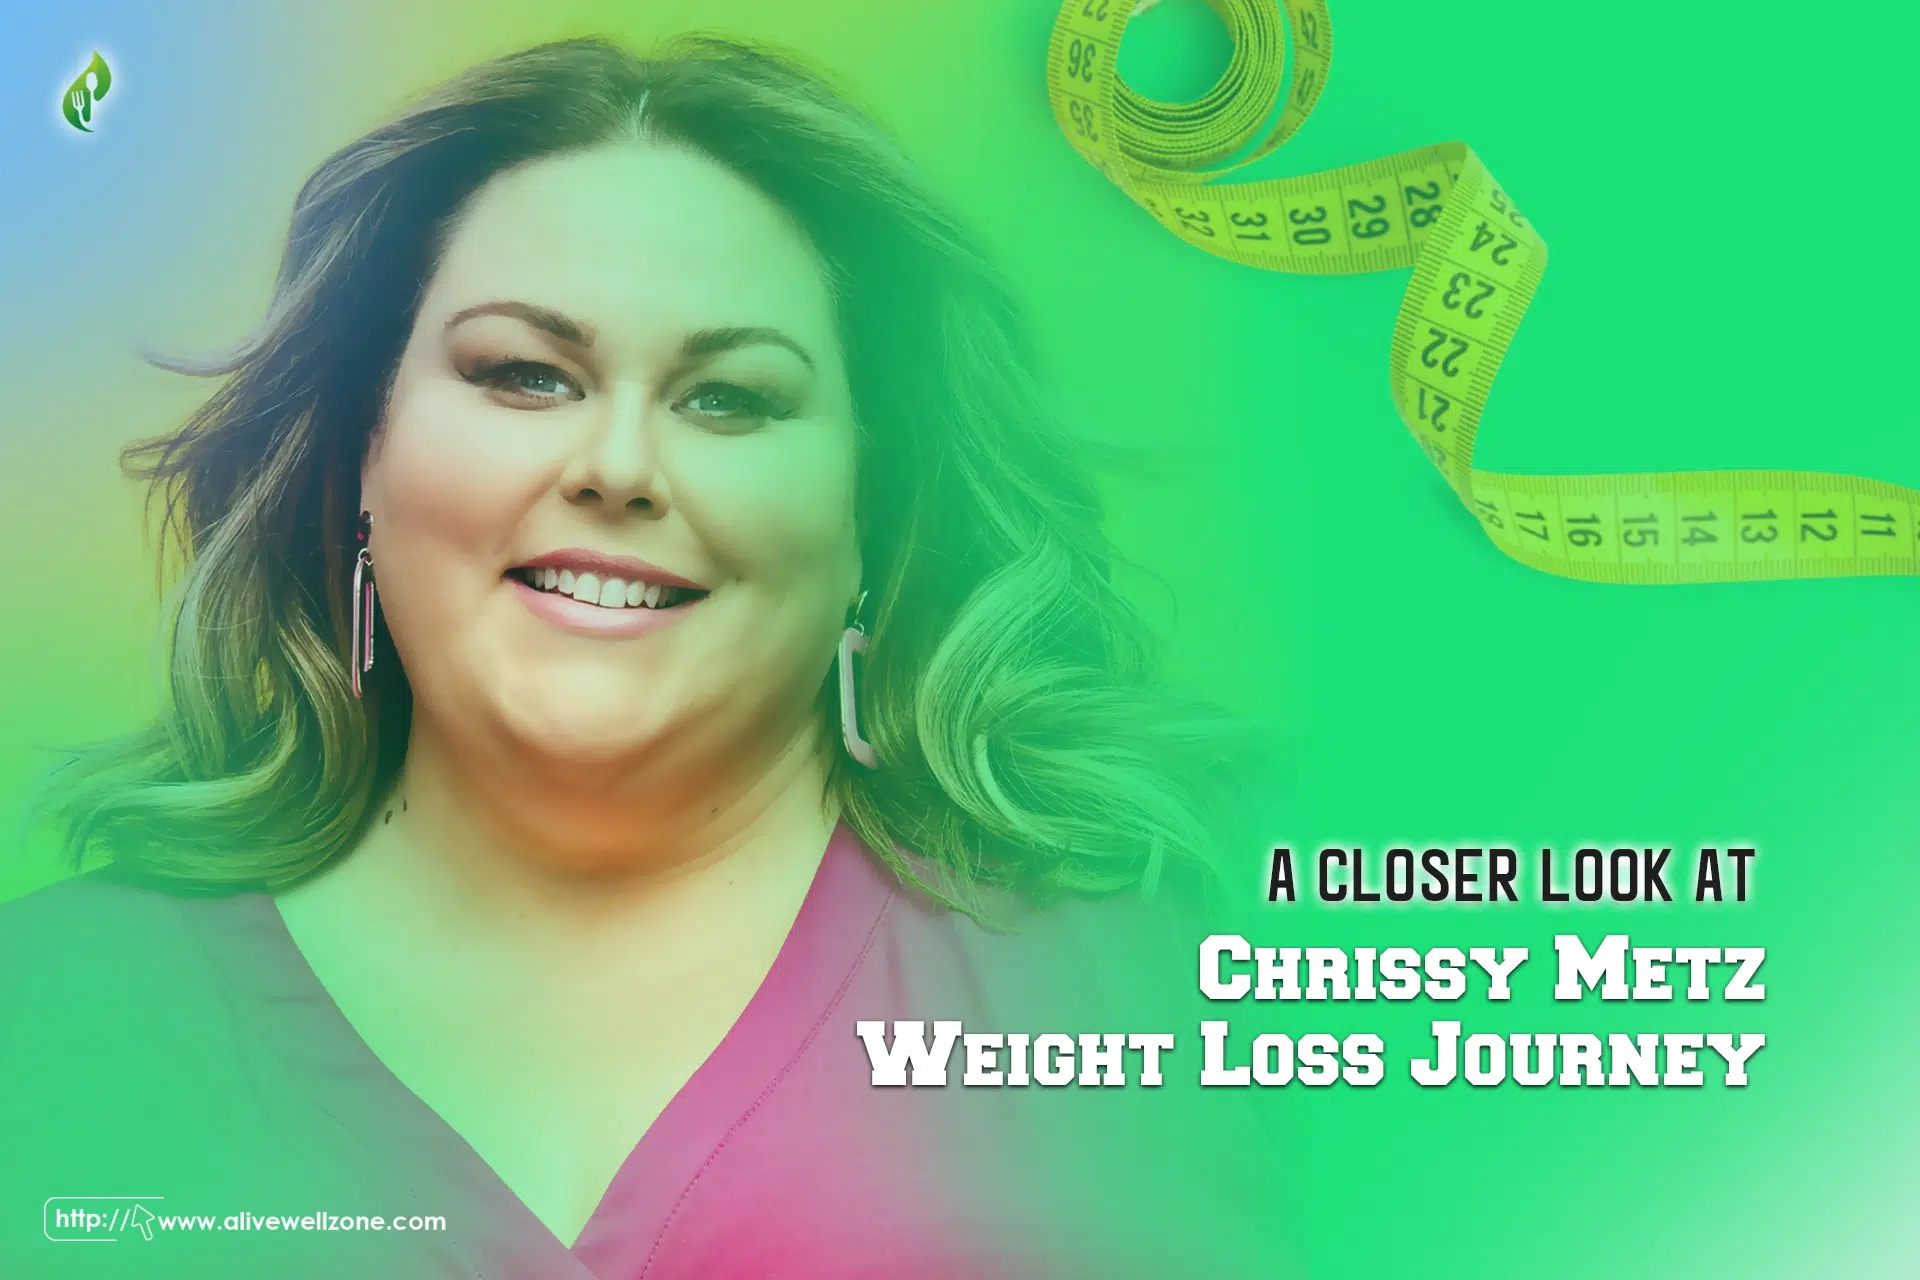 Chrissy Metz weight loss journey